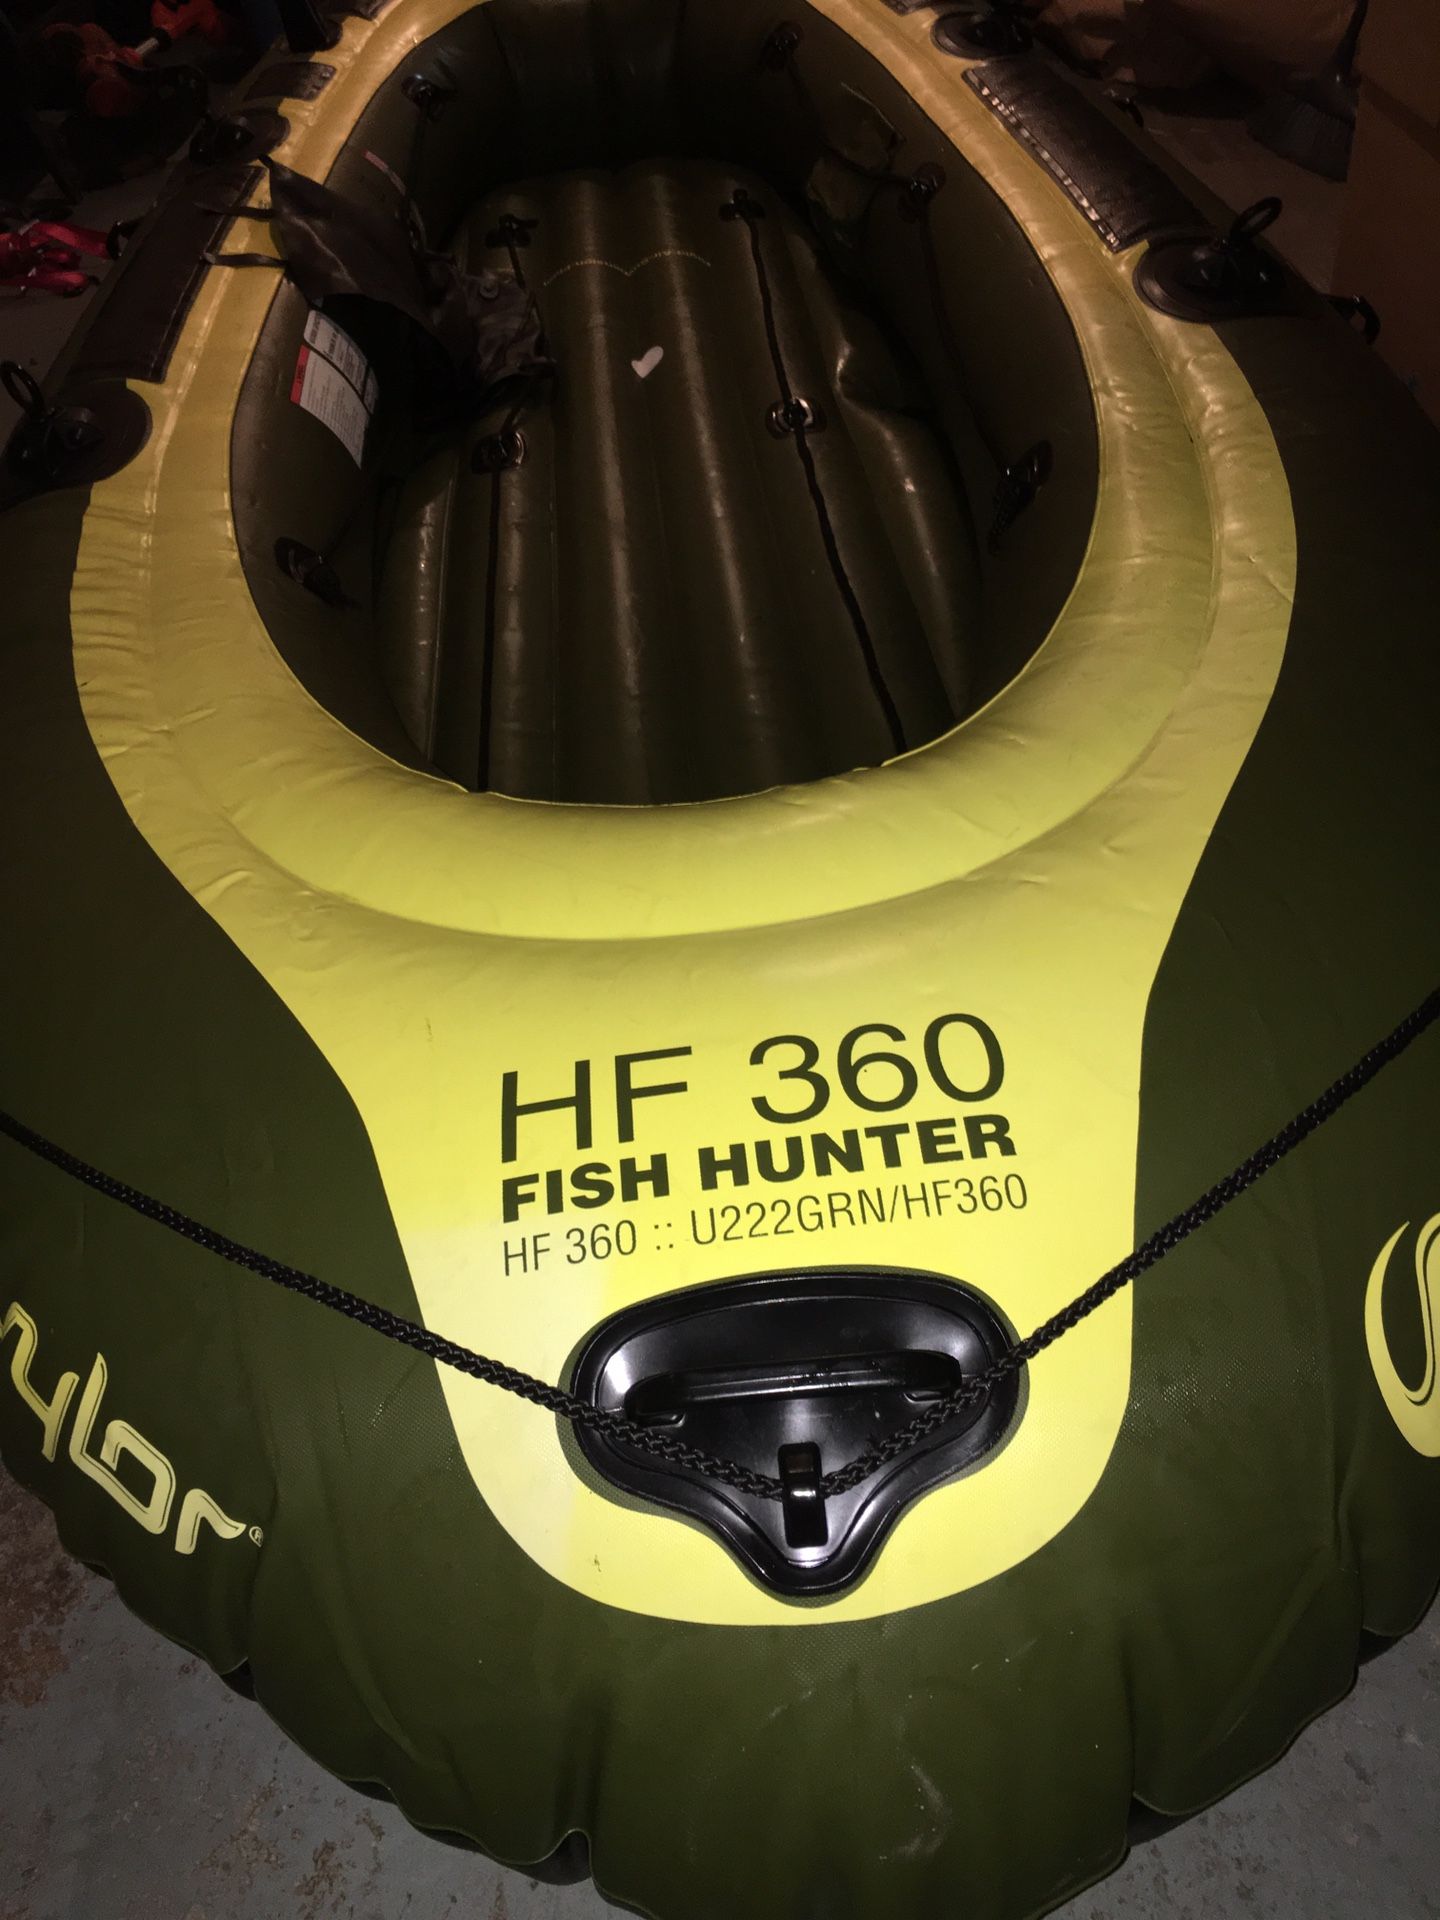 Boat, Sevylor, HF 360 Fish Hunter Inflatable Boat